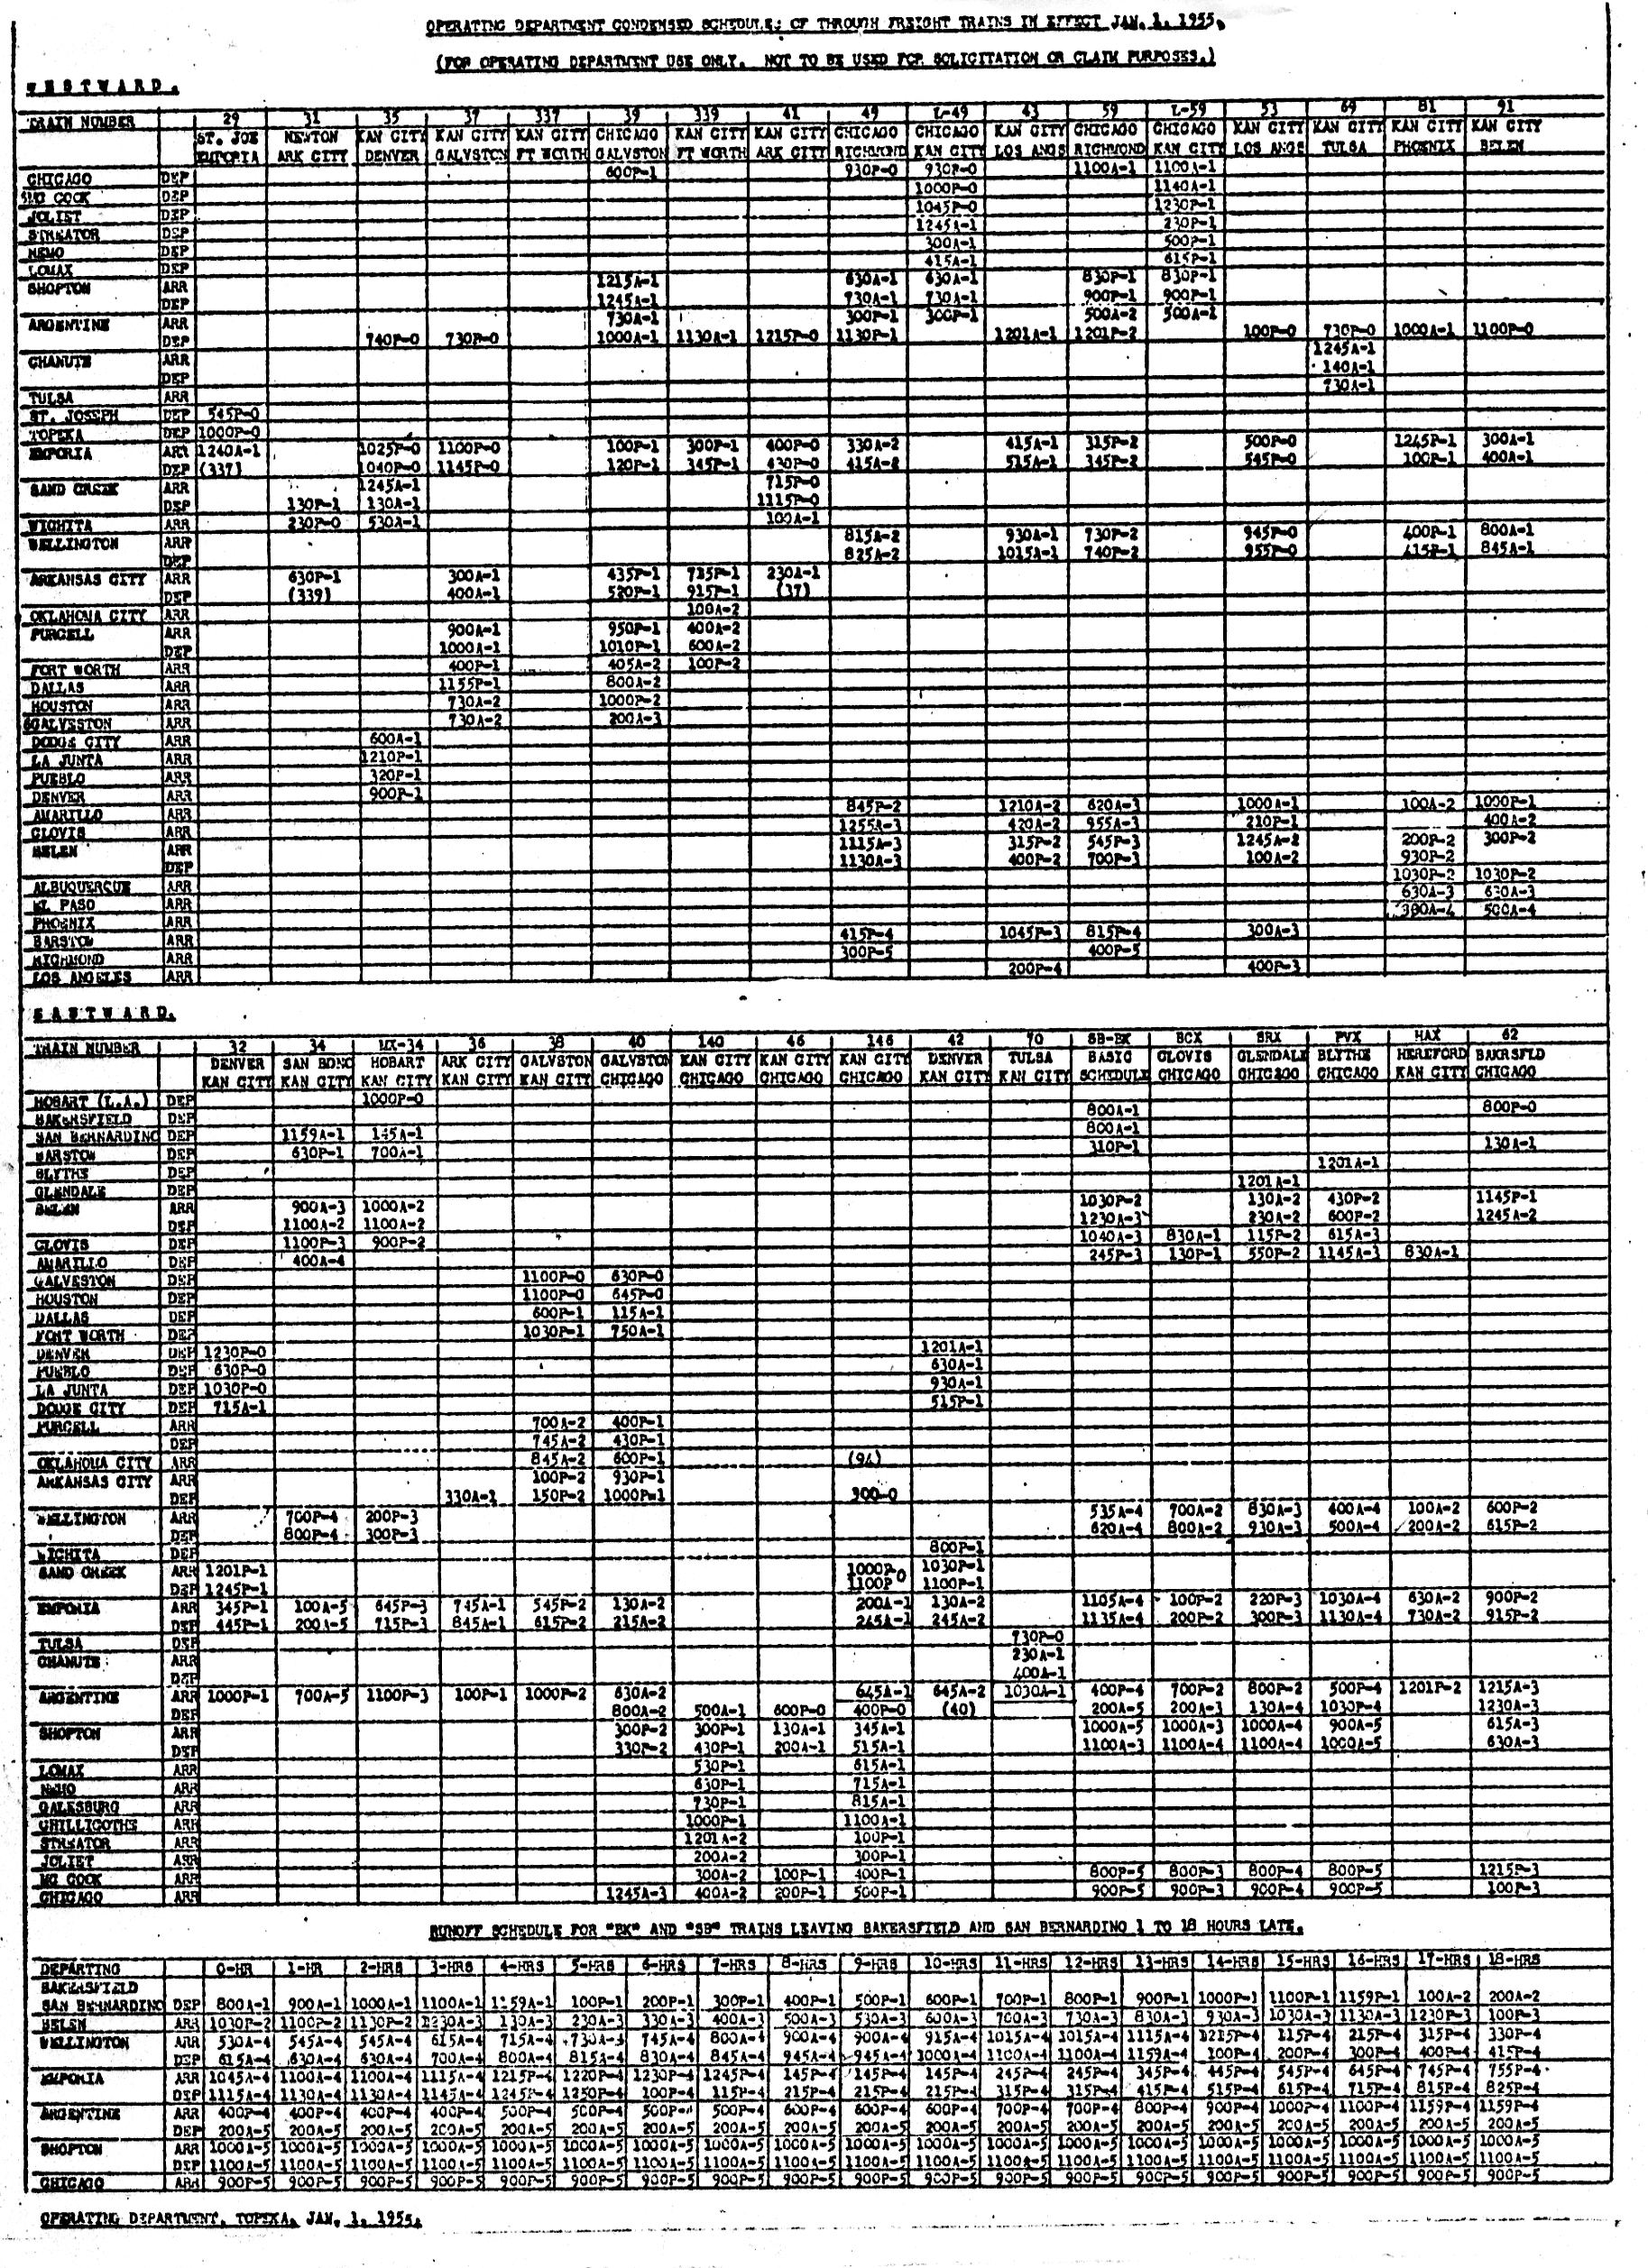 1955 Frt Schedule